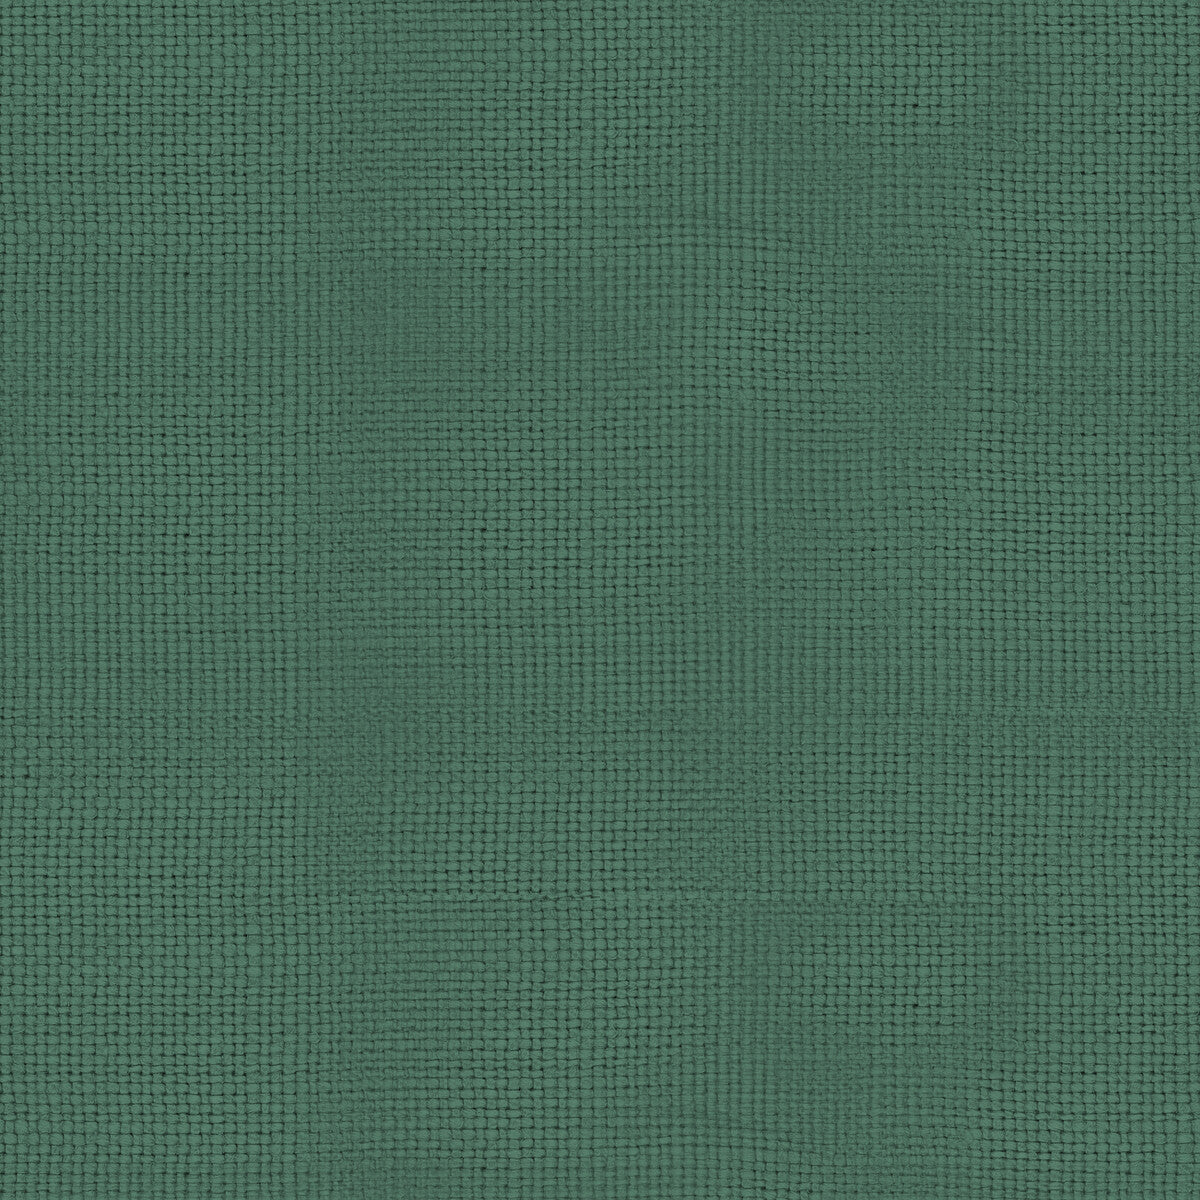 Kravet Design fabric in 32330-23 color - pattern 32330.23.0 - by Kravet Design in the Gis collection